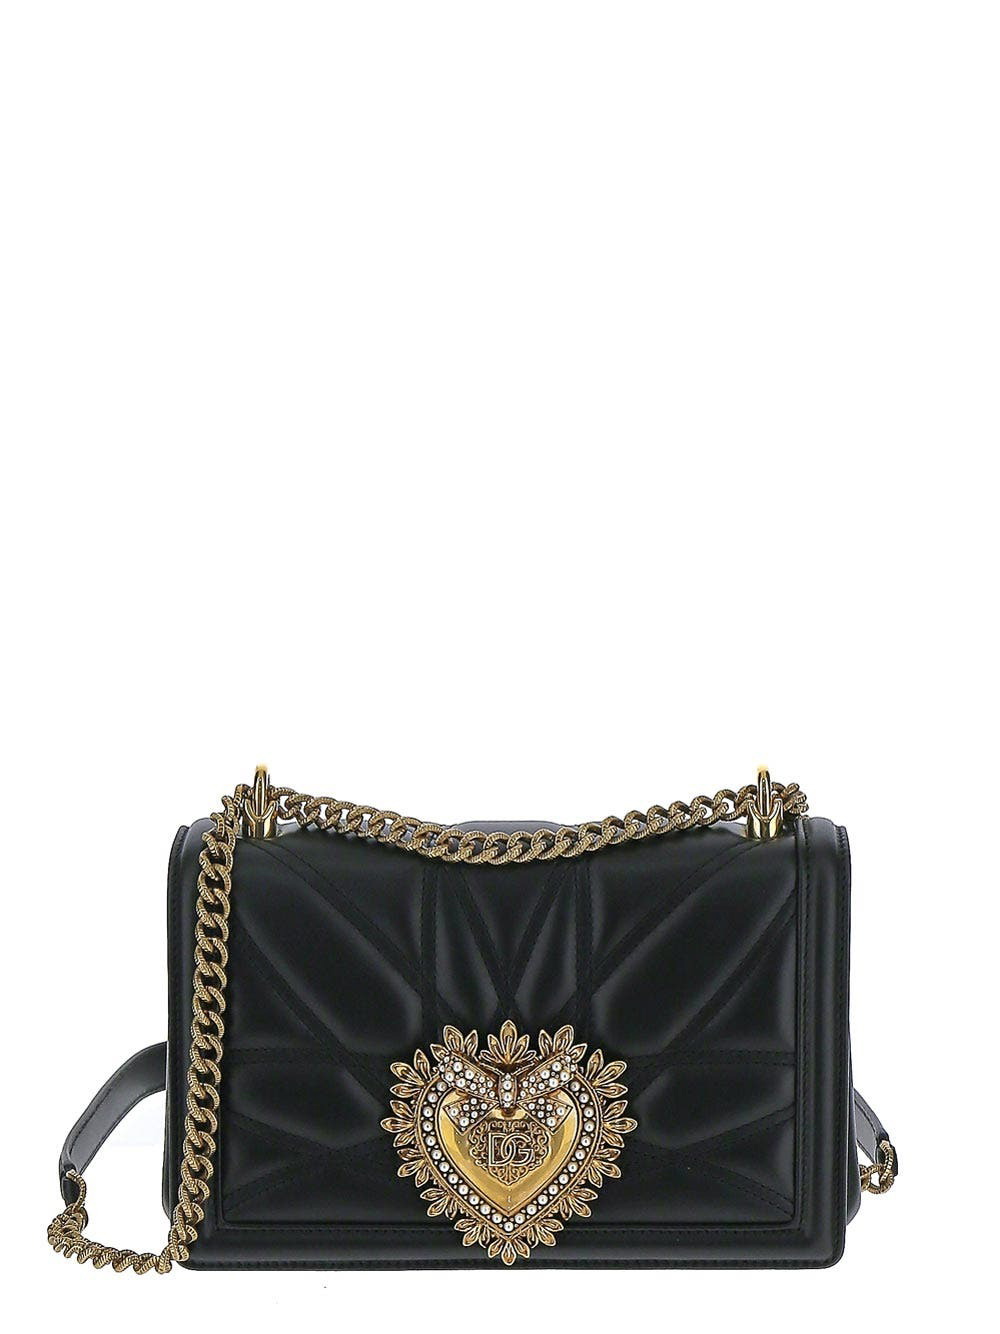 Photo: Dolce & Gabbana Devotion Bag